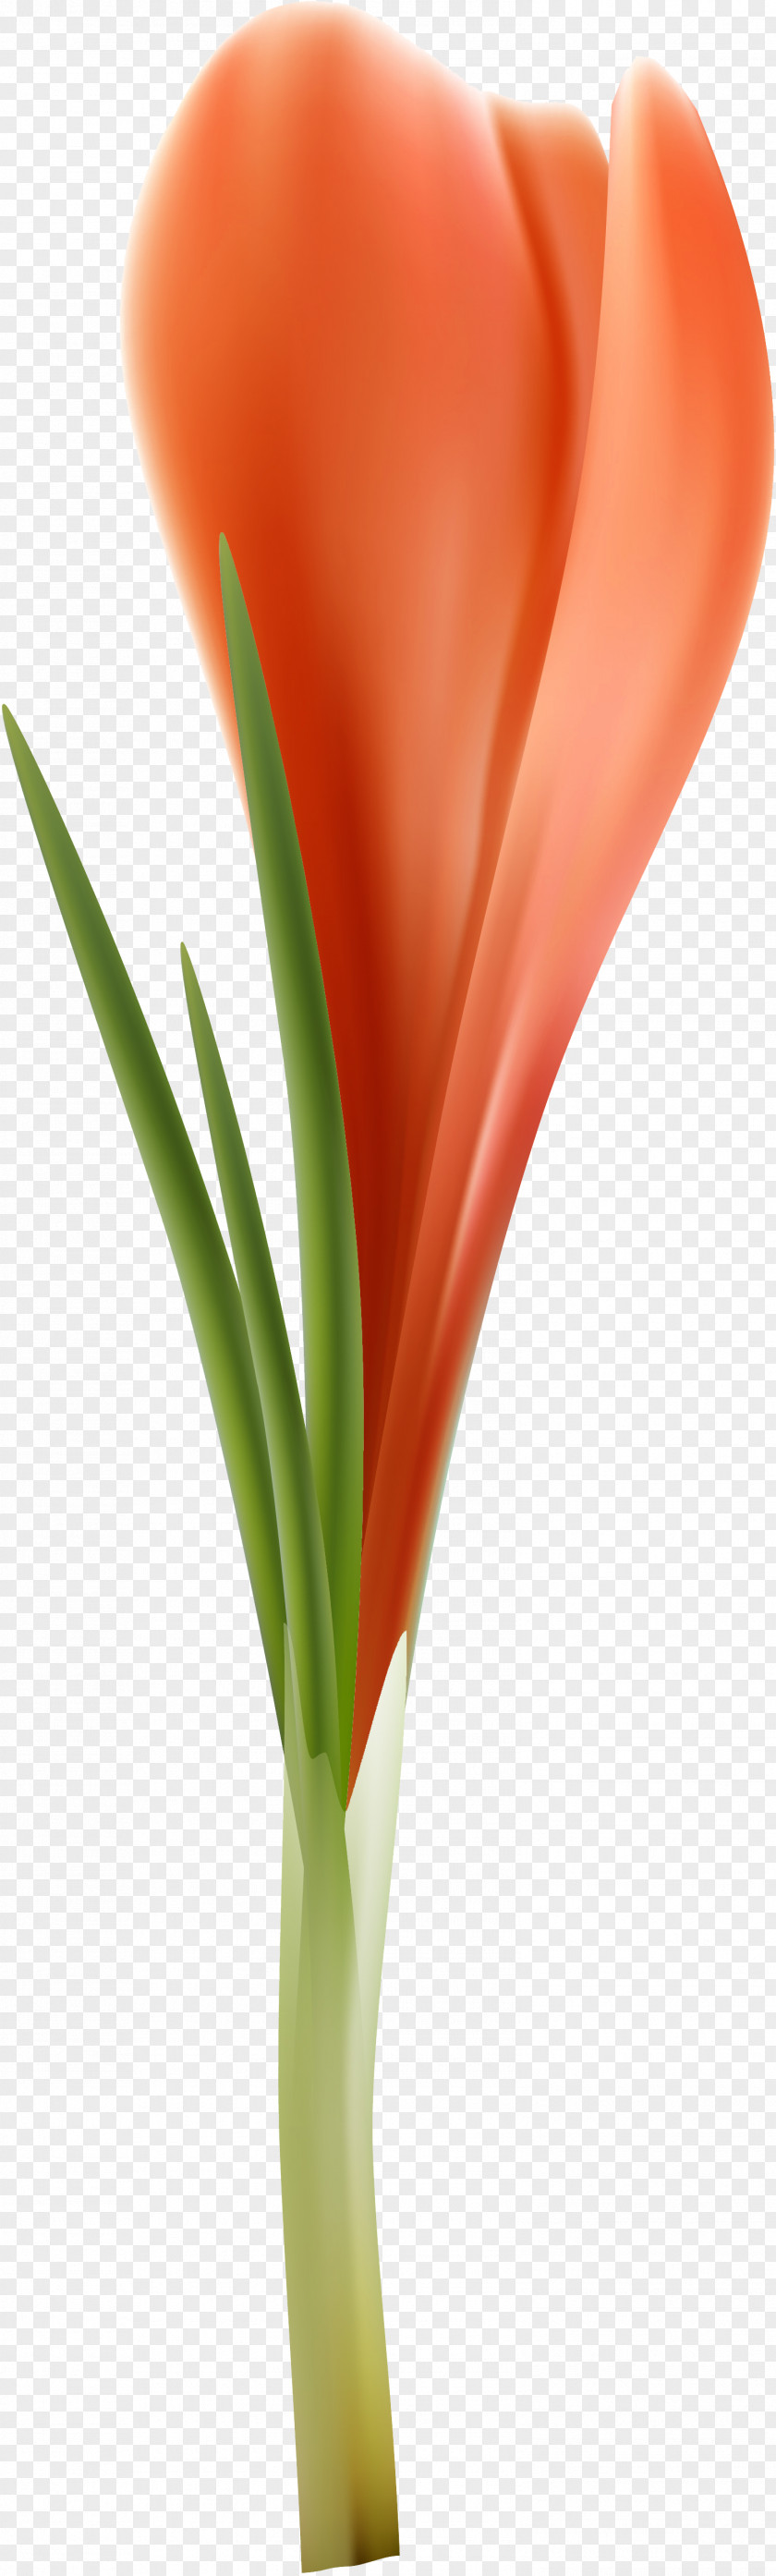 Crocus Flower Petal Plant Stem Still Life Photography Tulip PNG